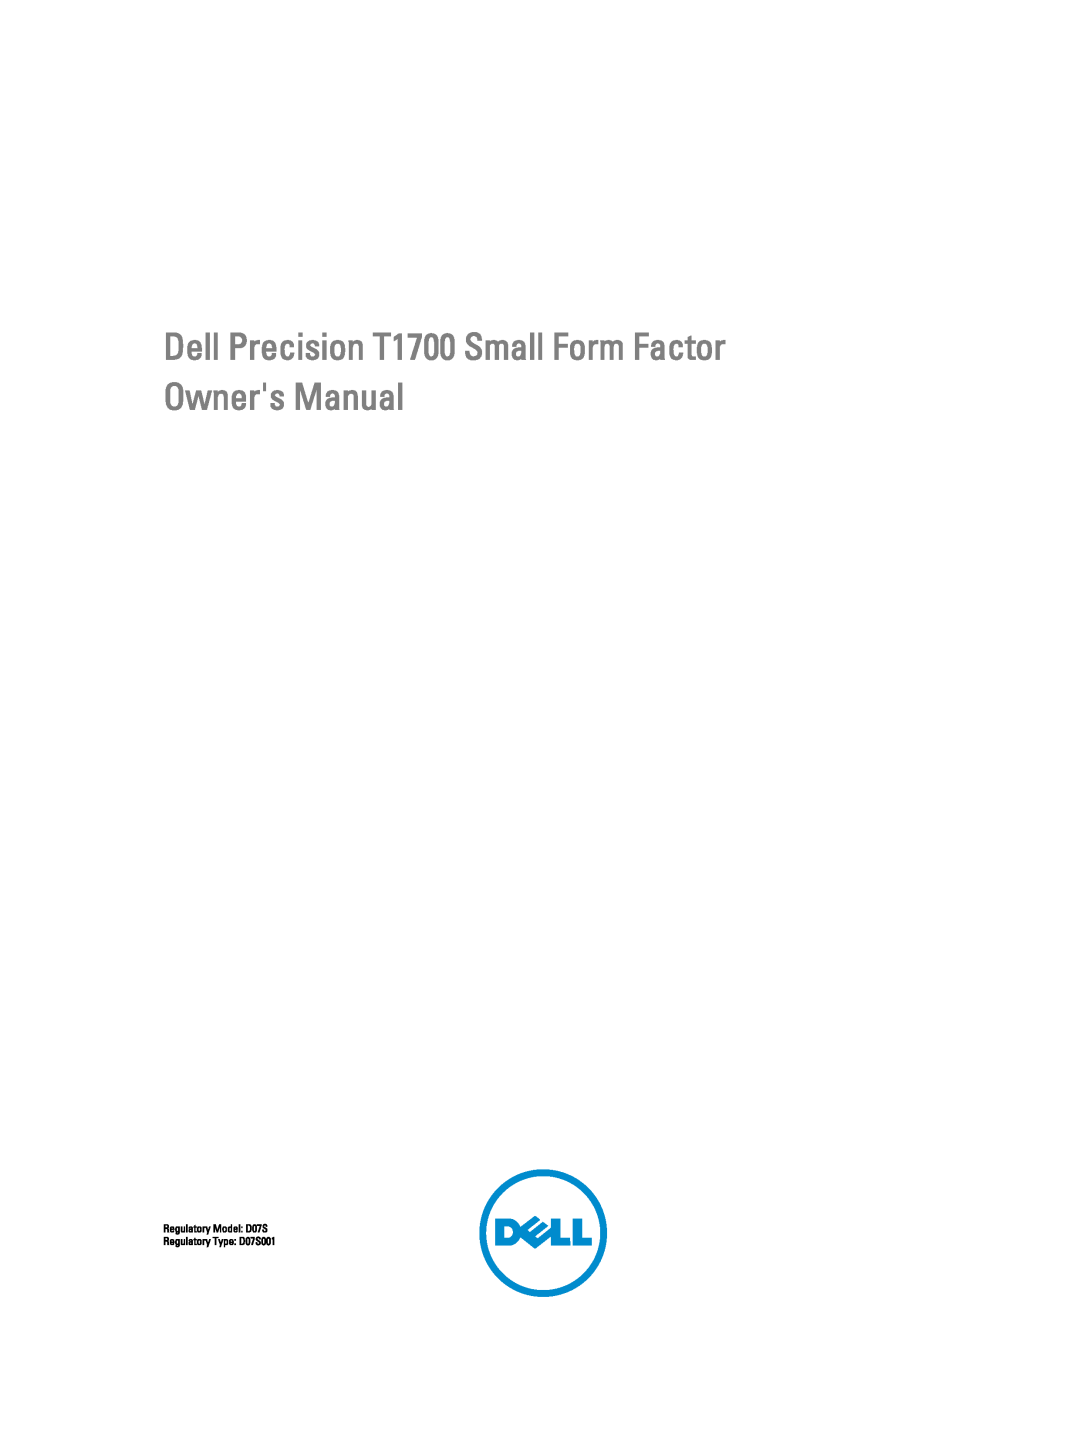 Dell owner manual Dell Precision T1700 Mini-TowerOwners Manual, Regulatory Model D13M Regulatory Type D13M001 